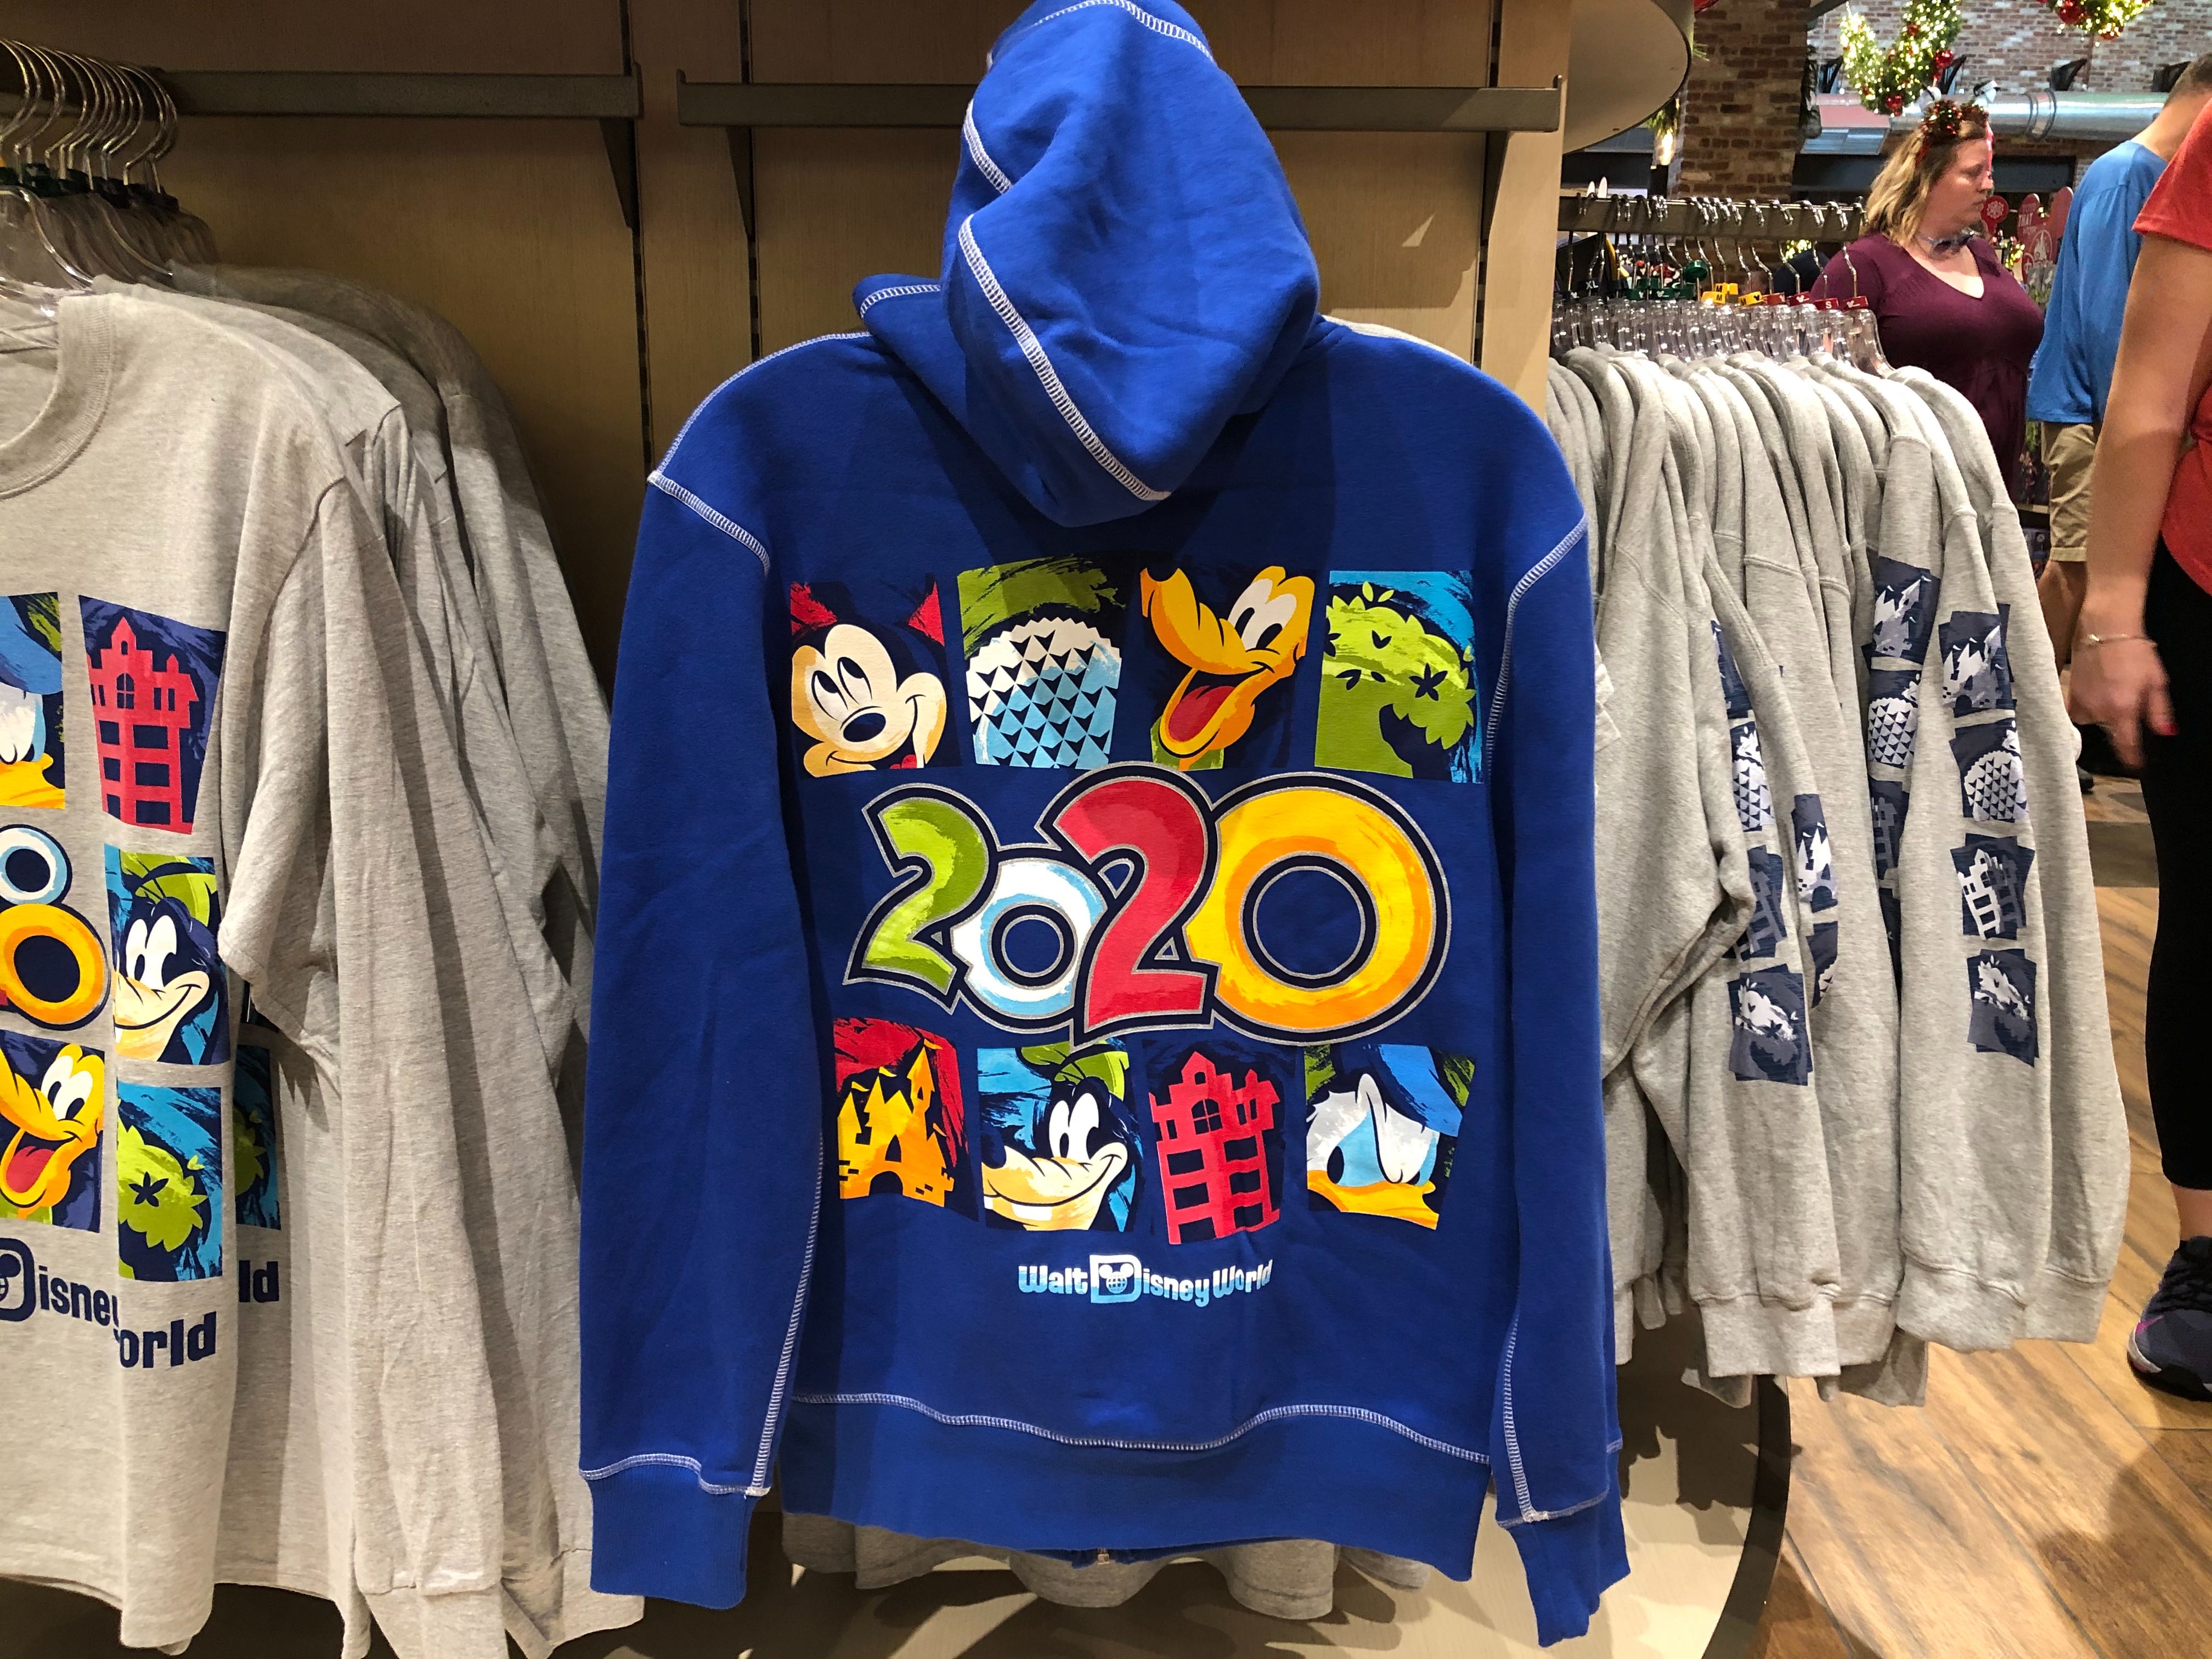 PHOTOS New 2020 Logo Merchandise Spotted at Walt Disney